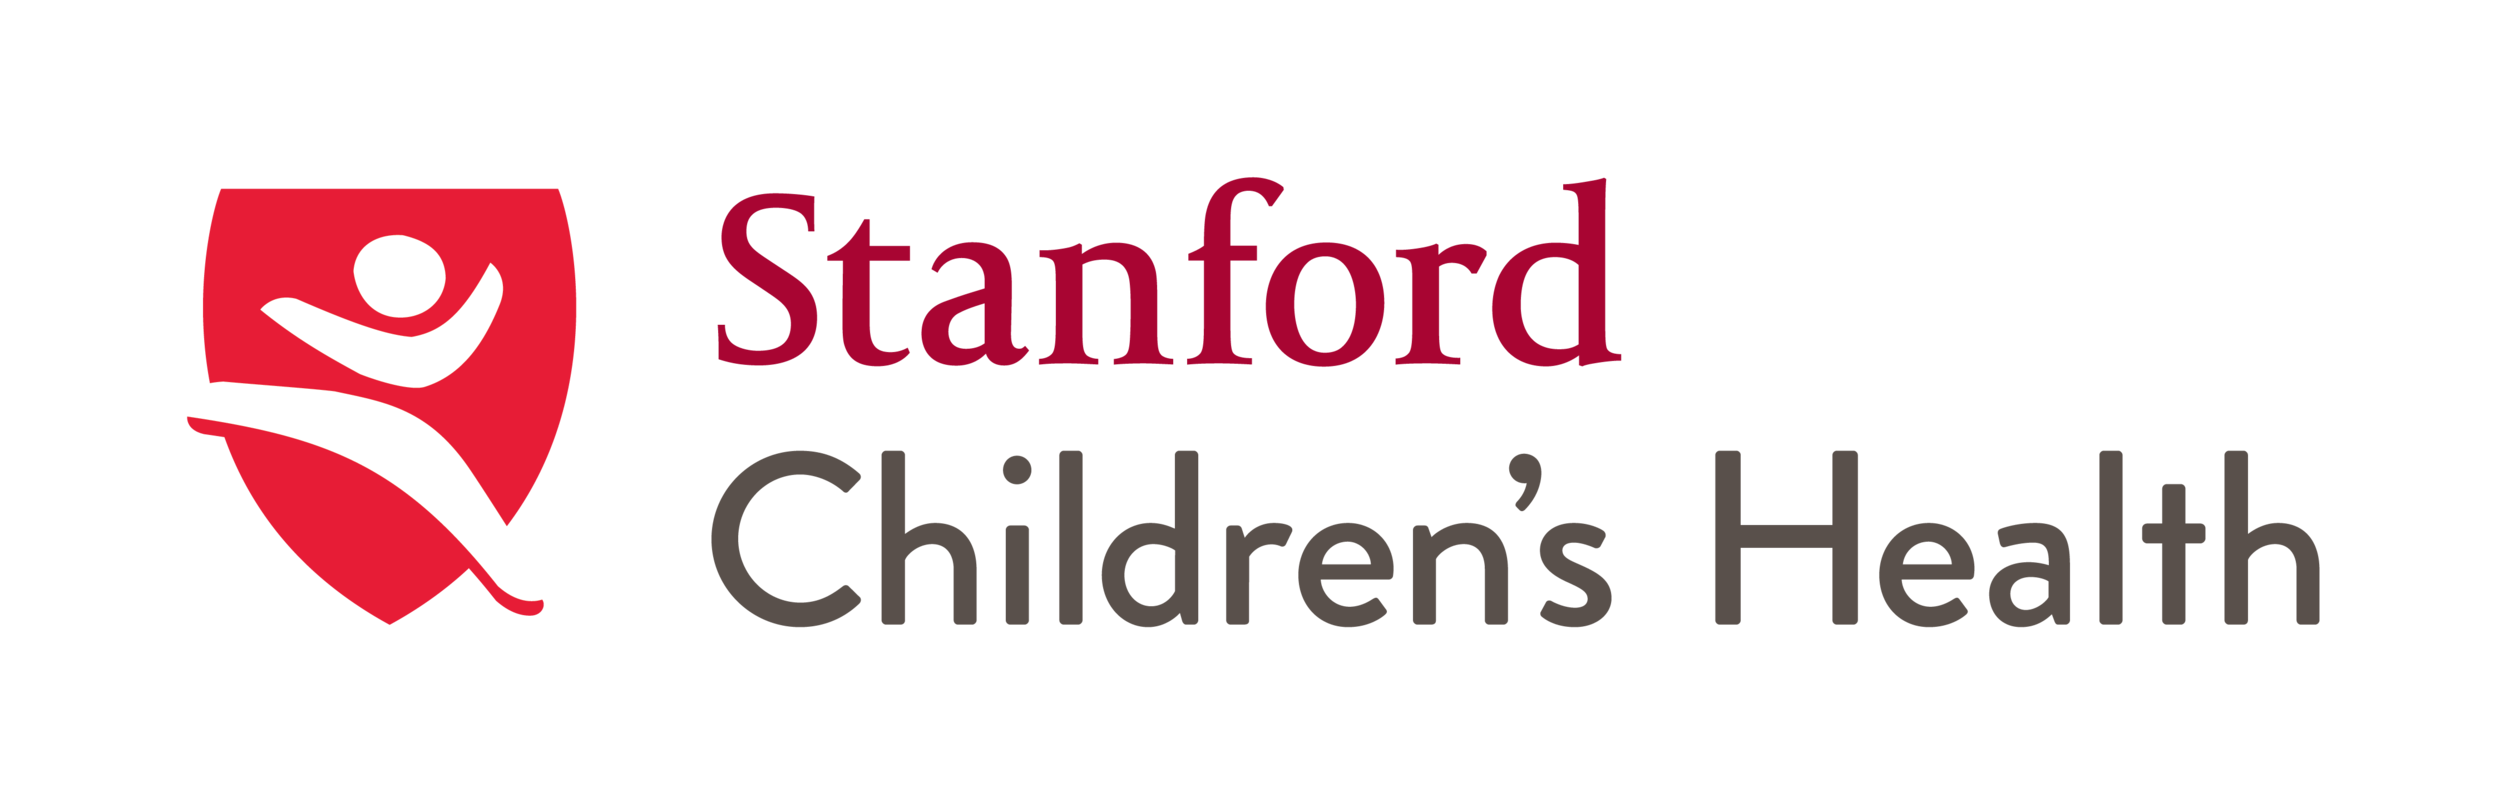 Stanford Children’s hospital VR AR VRARA.png